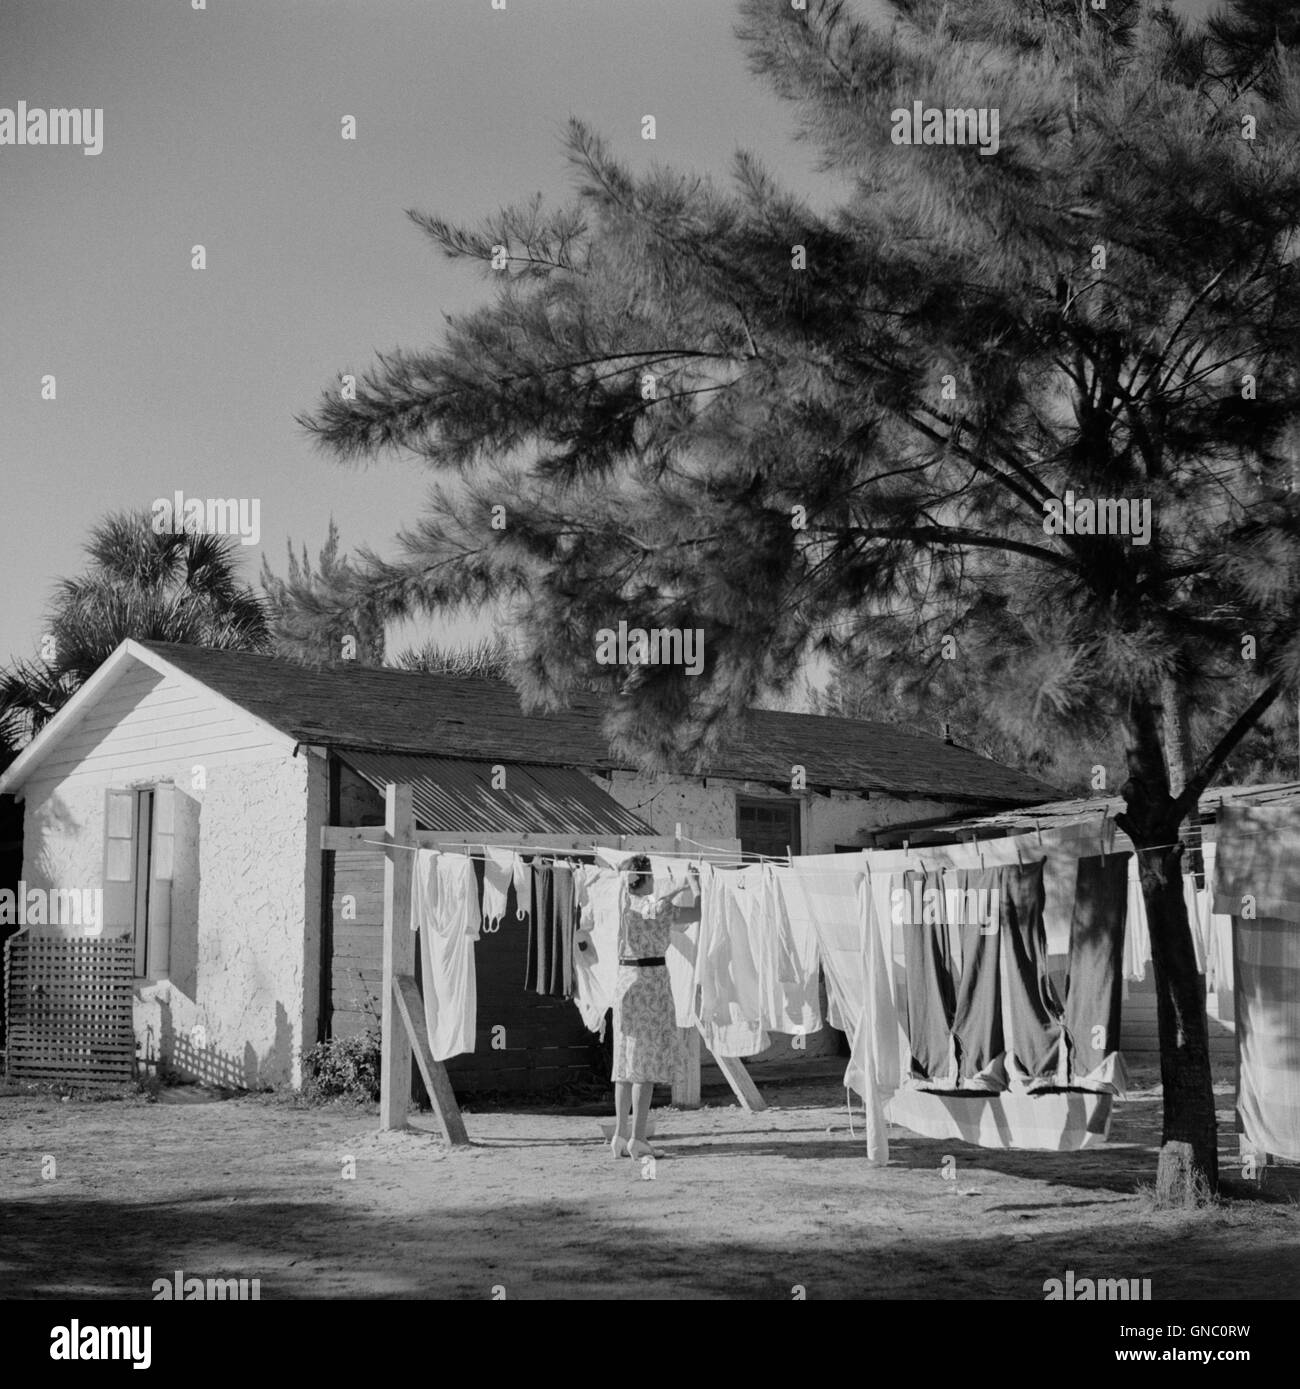 Woman Hanging Clothes on Clothesline, Sarasota Trailer Park, Sarasota, Florida, USA, Marion Post Wolcott for Farm Security Administration, January 1941 Stock Photo